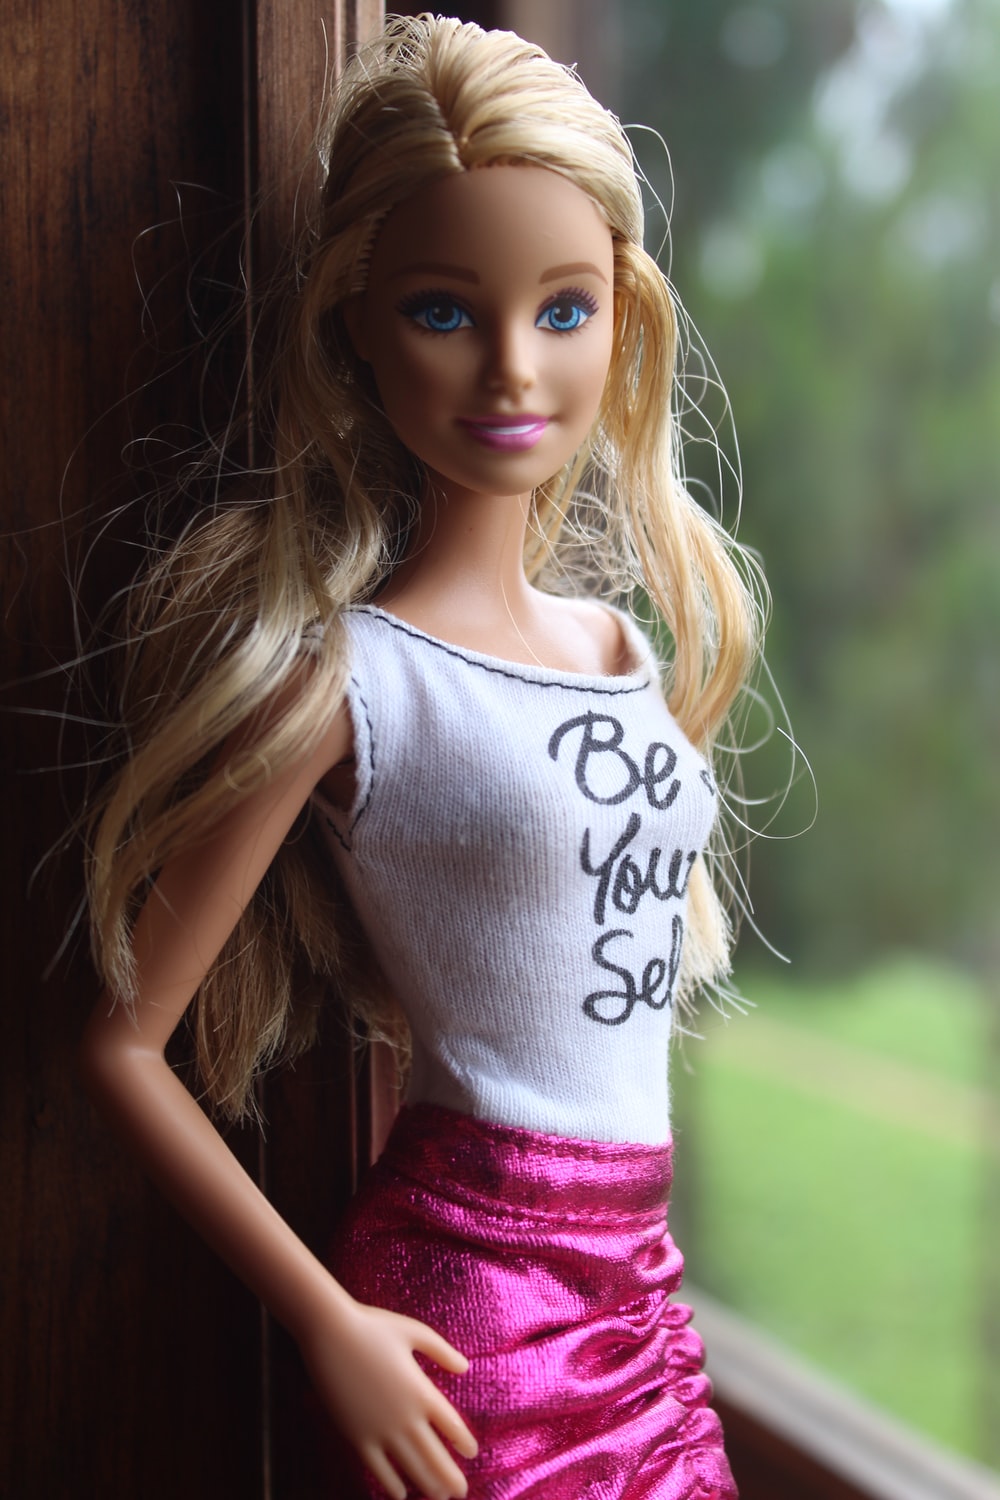 Barbie Photo [HQ]. Download Free Image